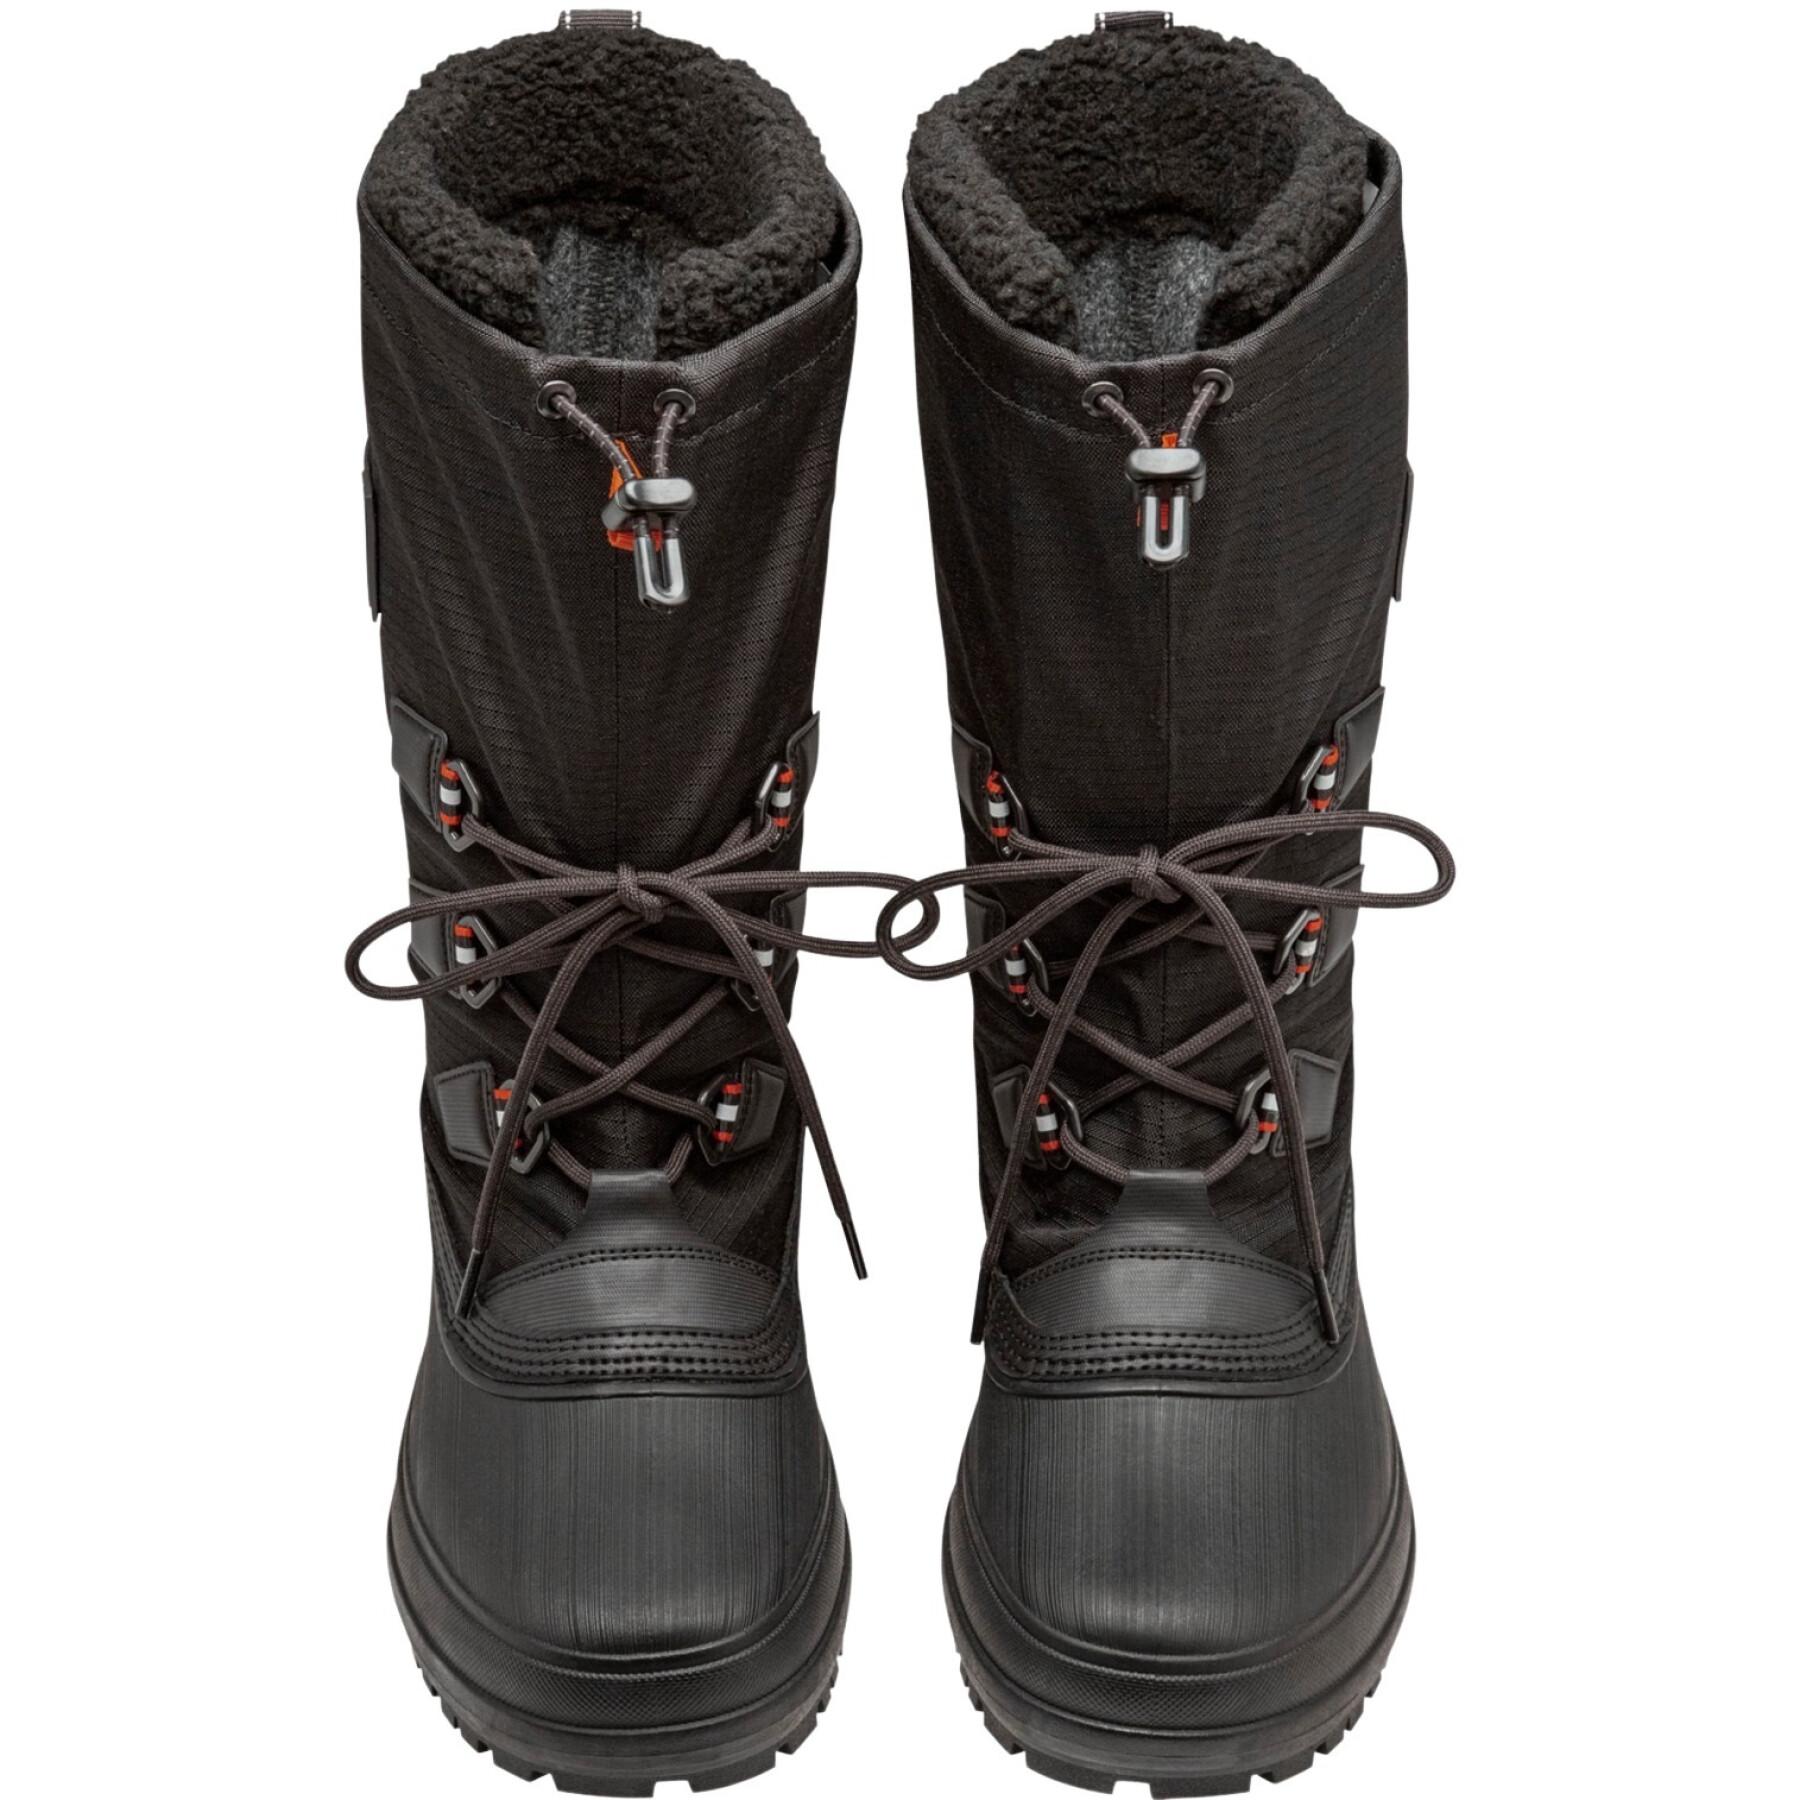 Winter boots Helly Hansen arctic patrol